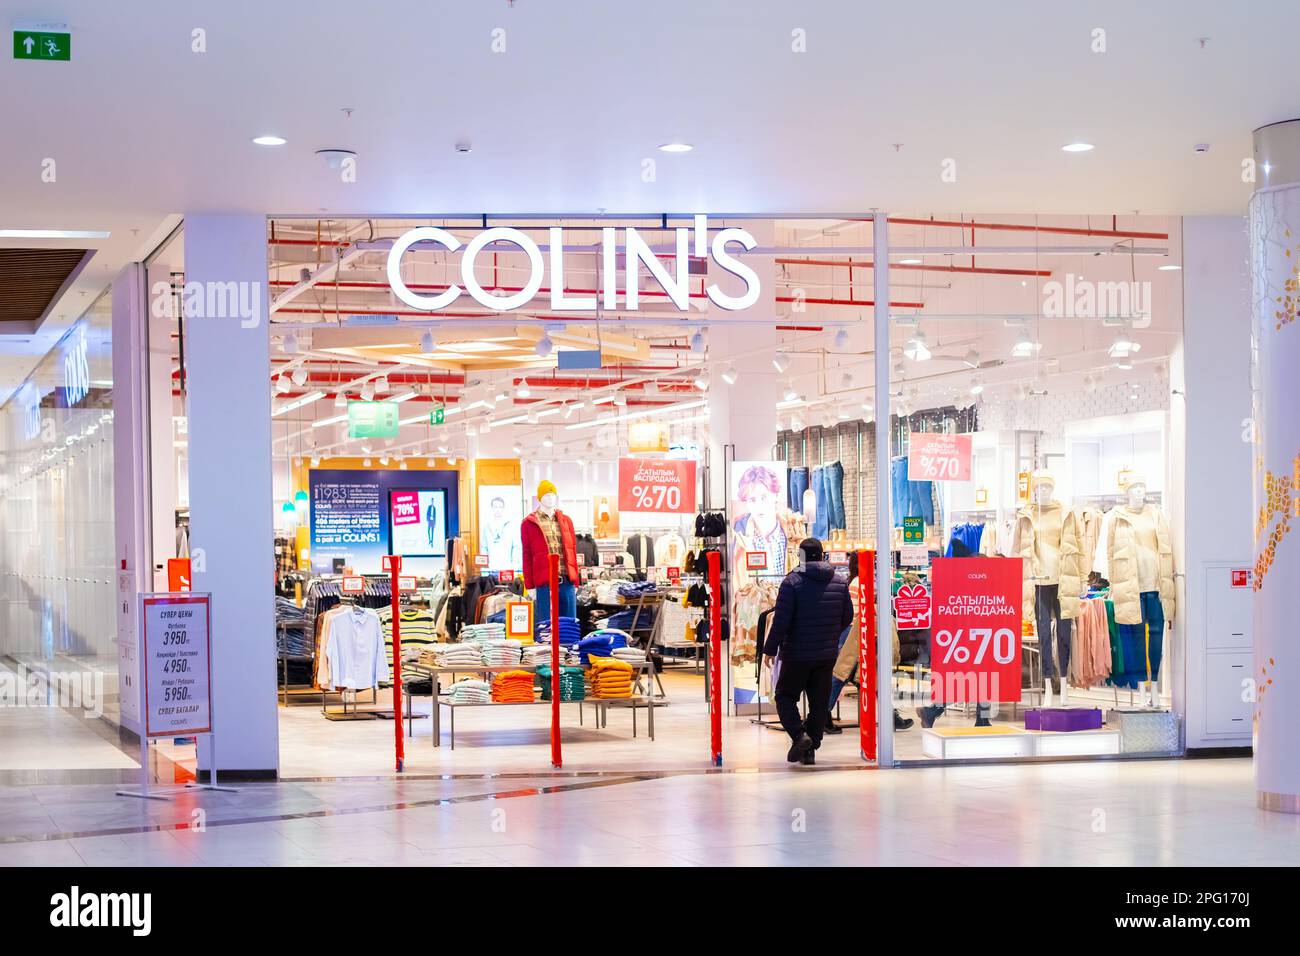 colin's store shop in shopping mall. clothing store entrance, Colin's logo sign. Pavlodar, Kazakhstan - 01.17.2023. Stock Photo